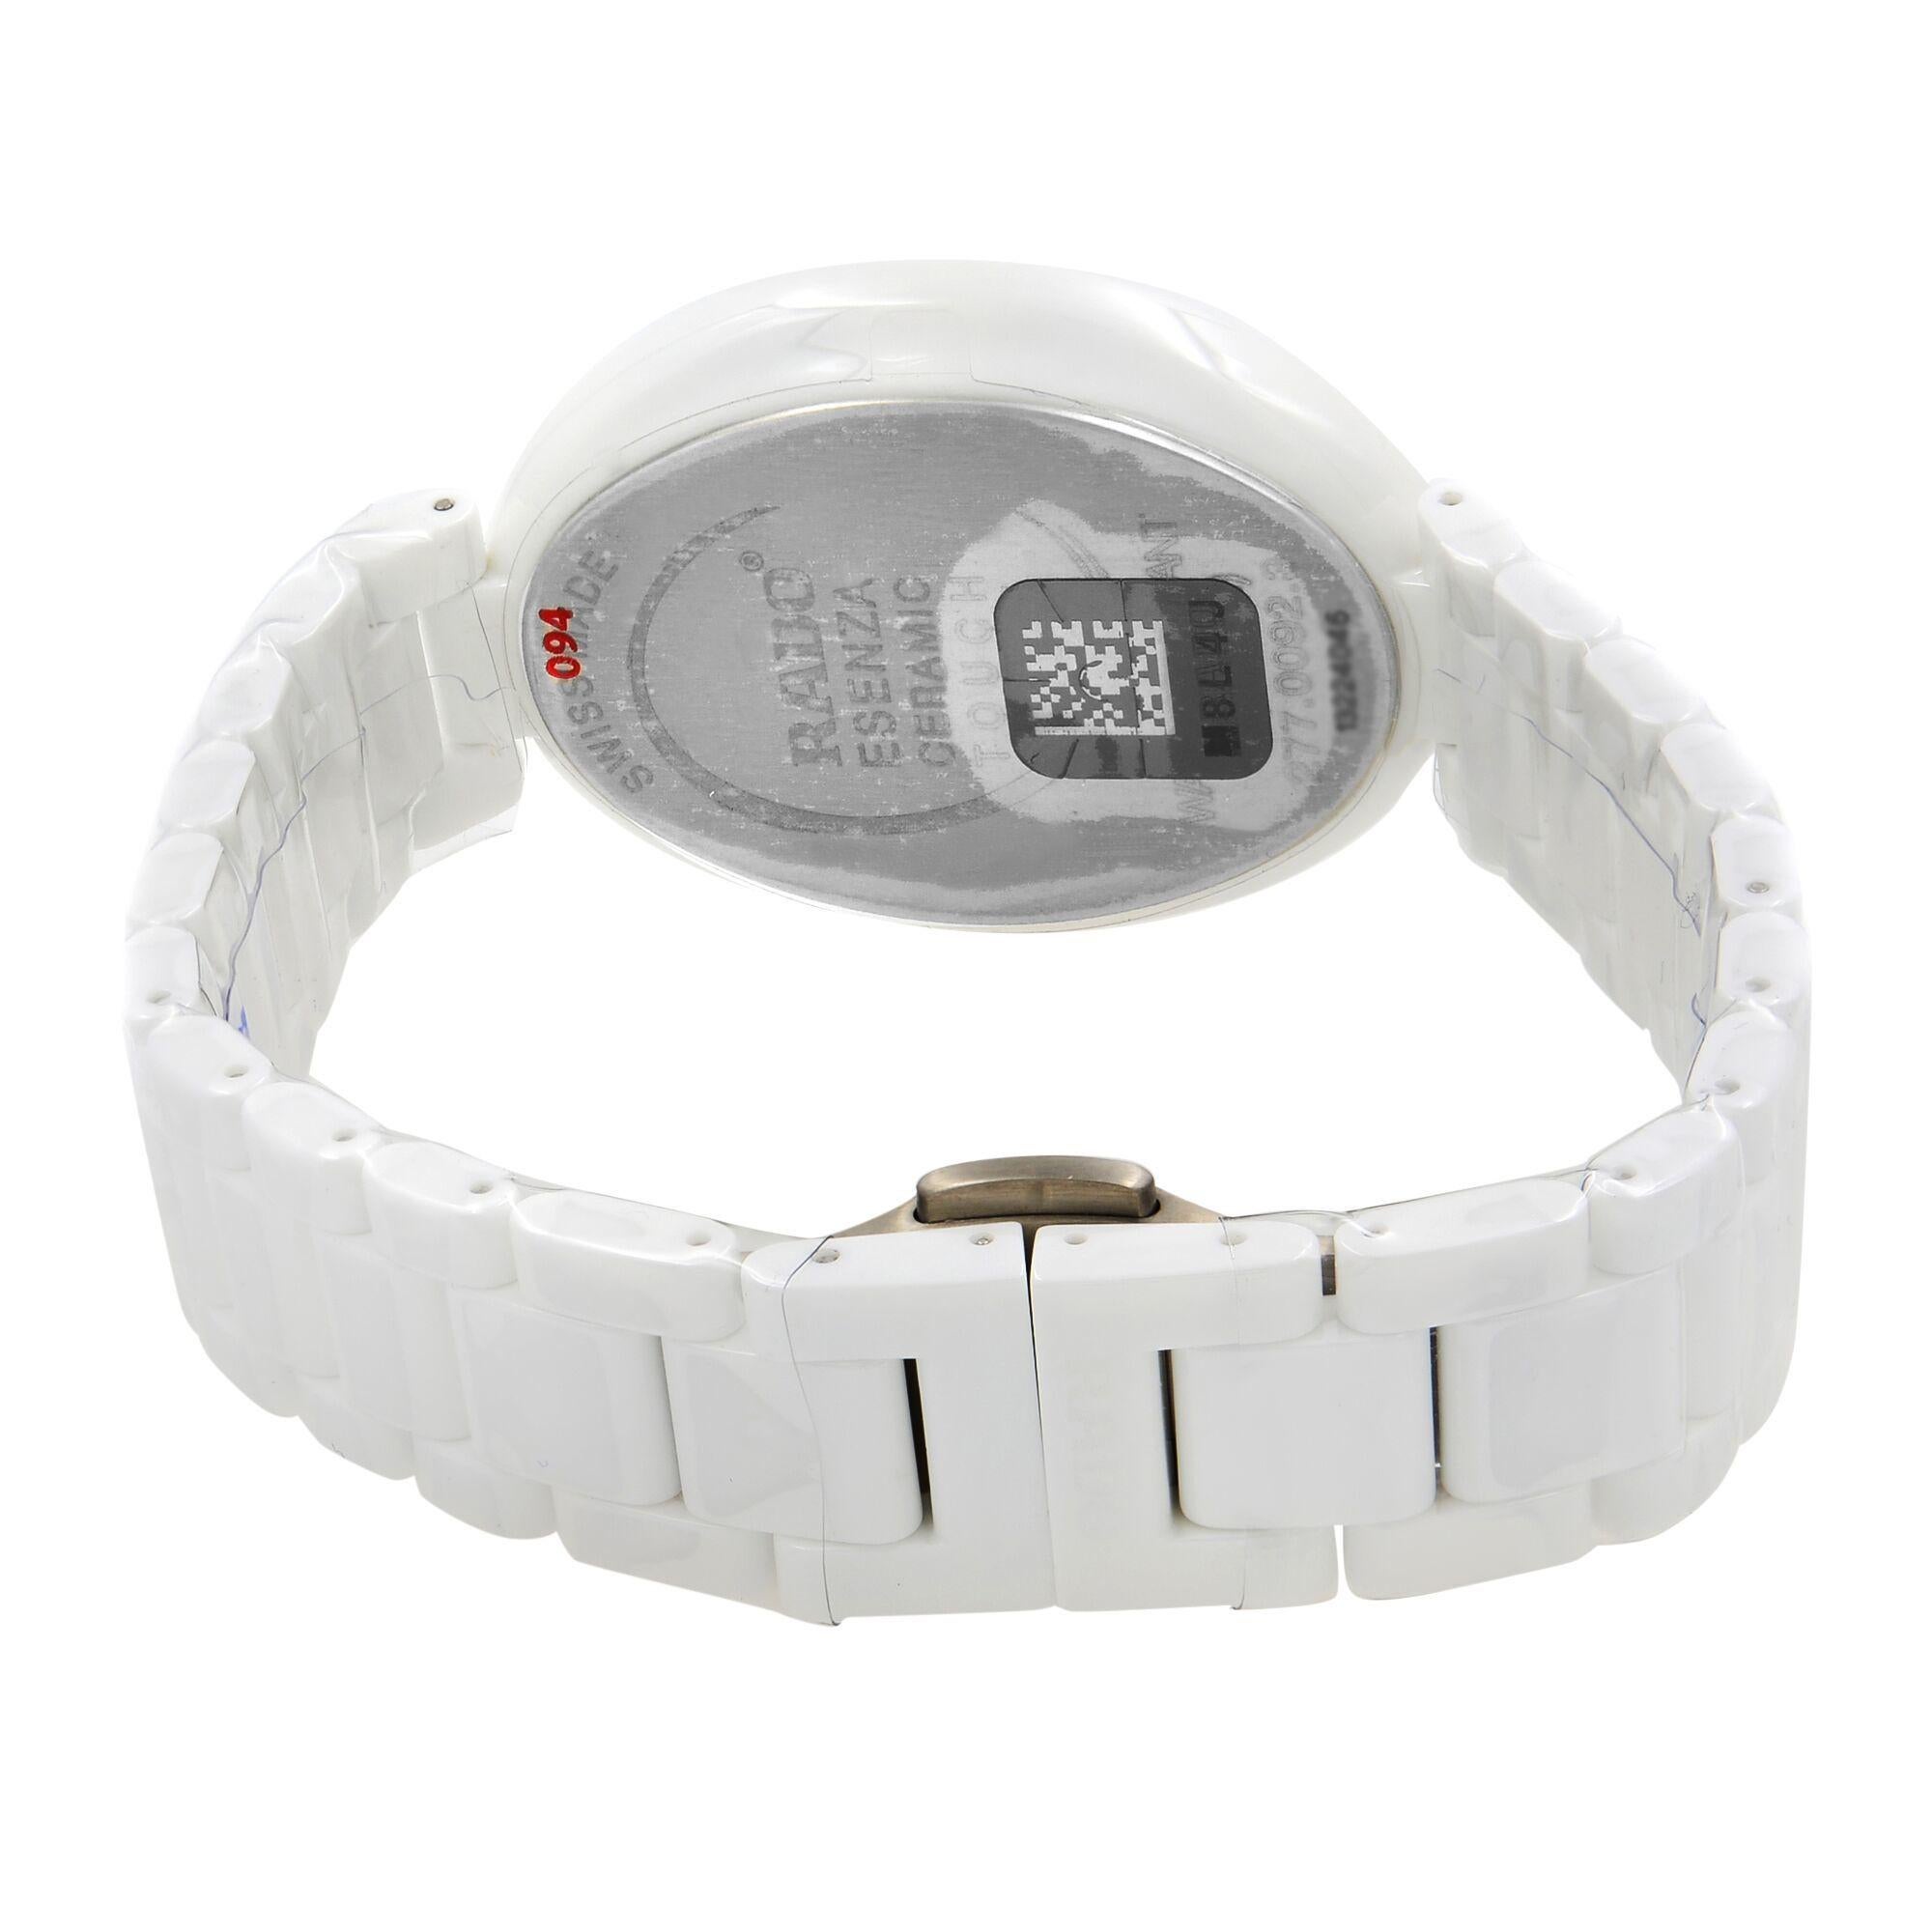 Rado Esenza White Ceramic White Dial Ladies Quartz Watch R53092012 In New Condition For Sale In New York, NY